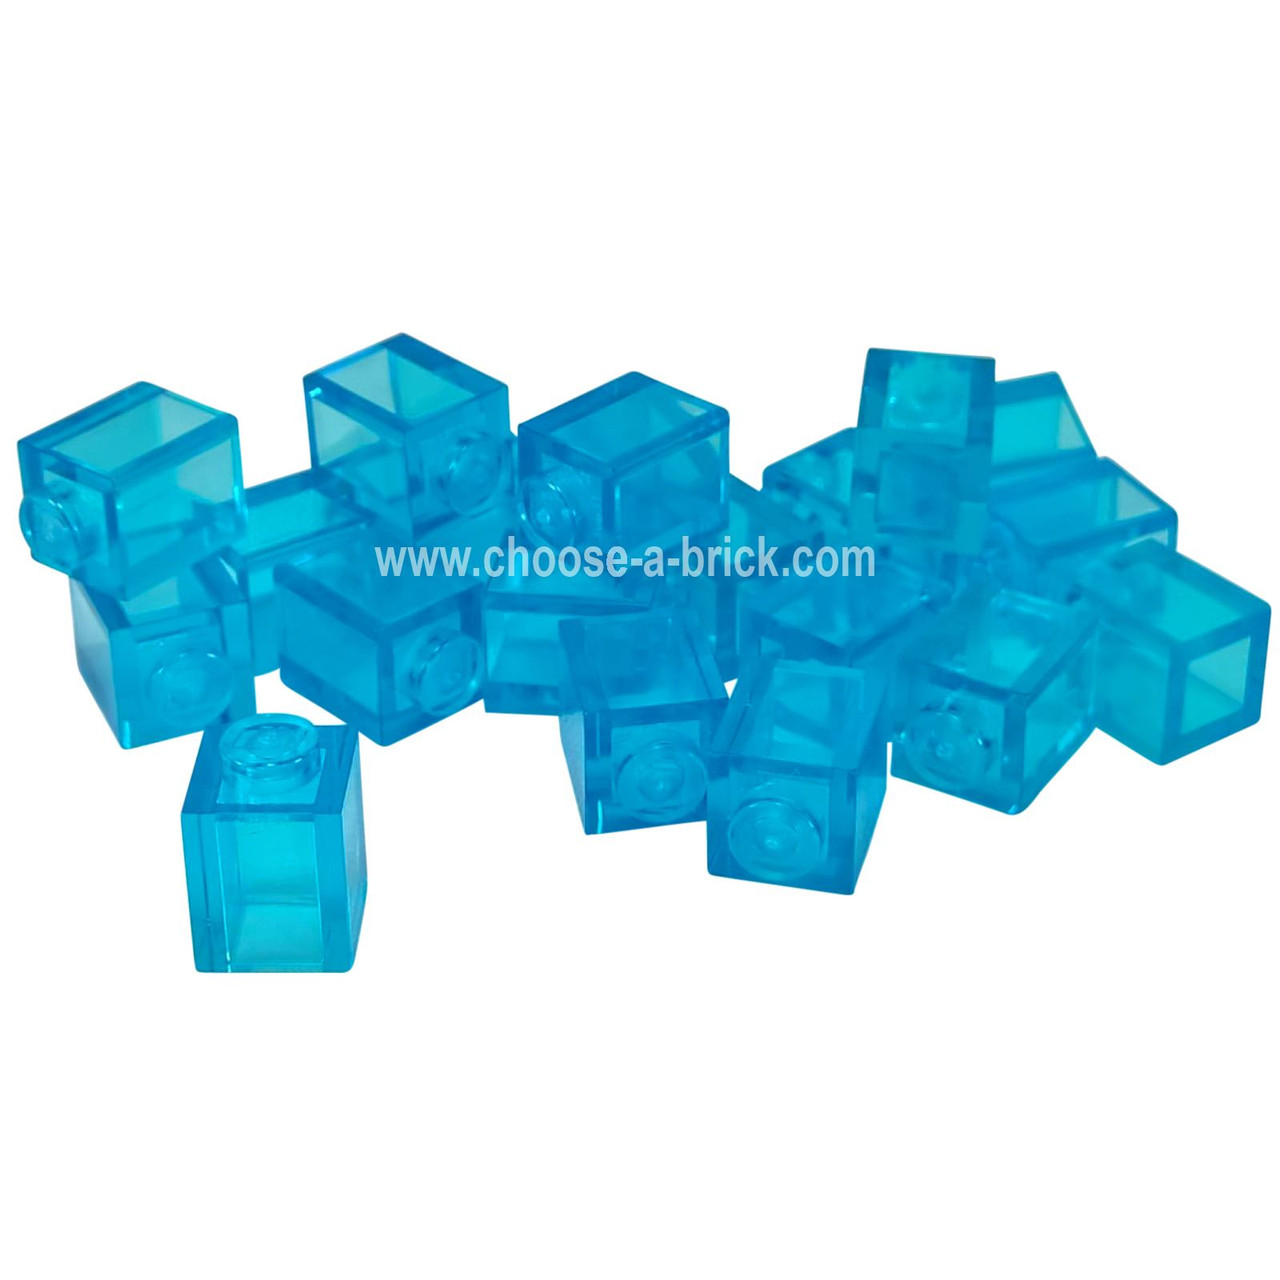 LEGO® Brique 1 x 1 - 3005 - Vert Sable